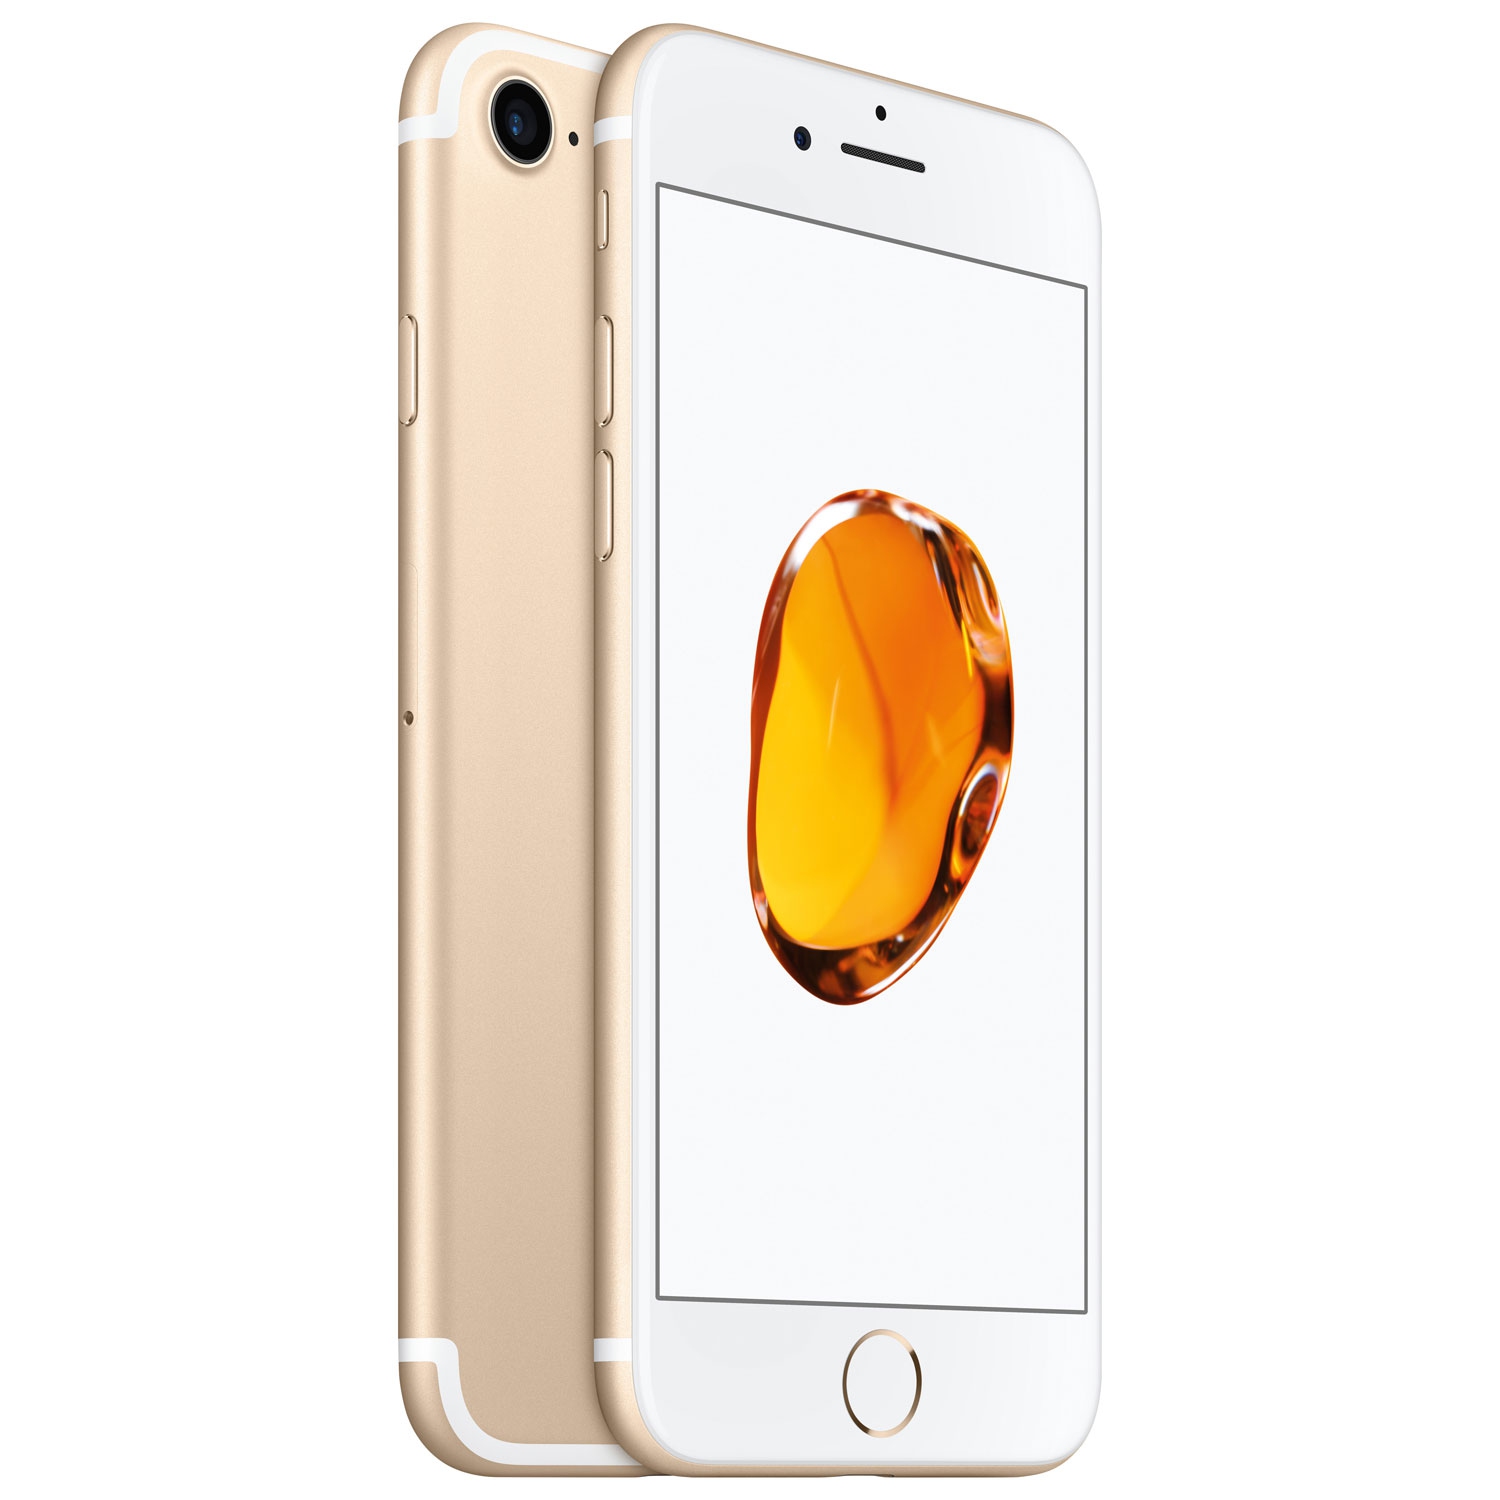 Refurbished (Excellent) - Apple iPhone 7 32GB Smartphone - Gold - Unlocked - Certified Refurbished